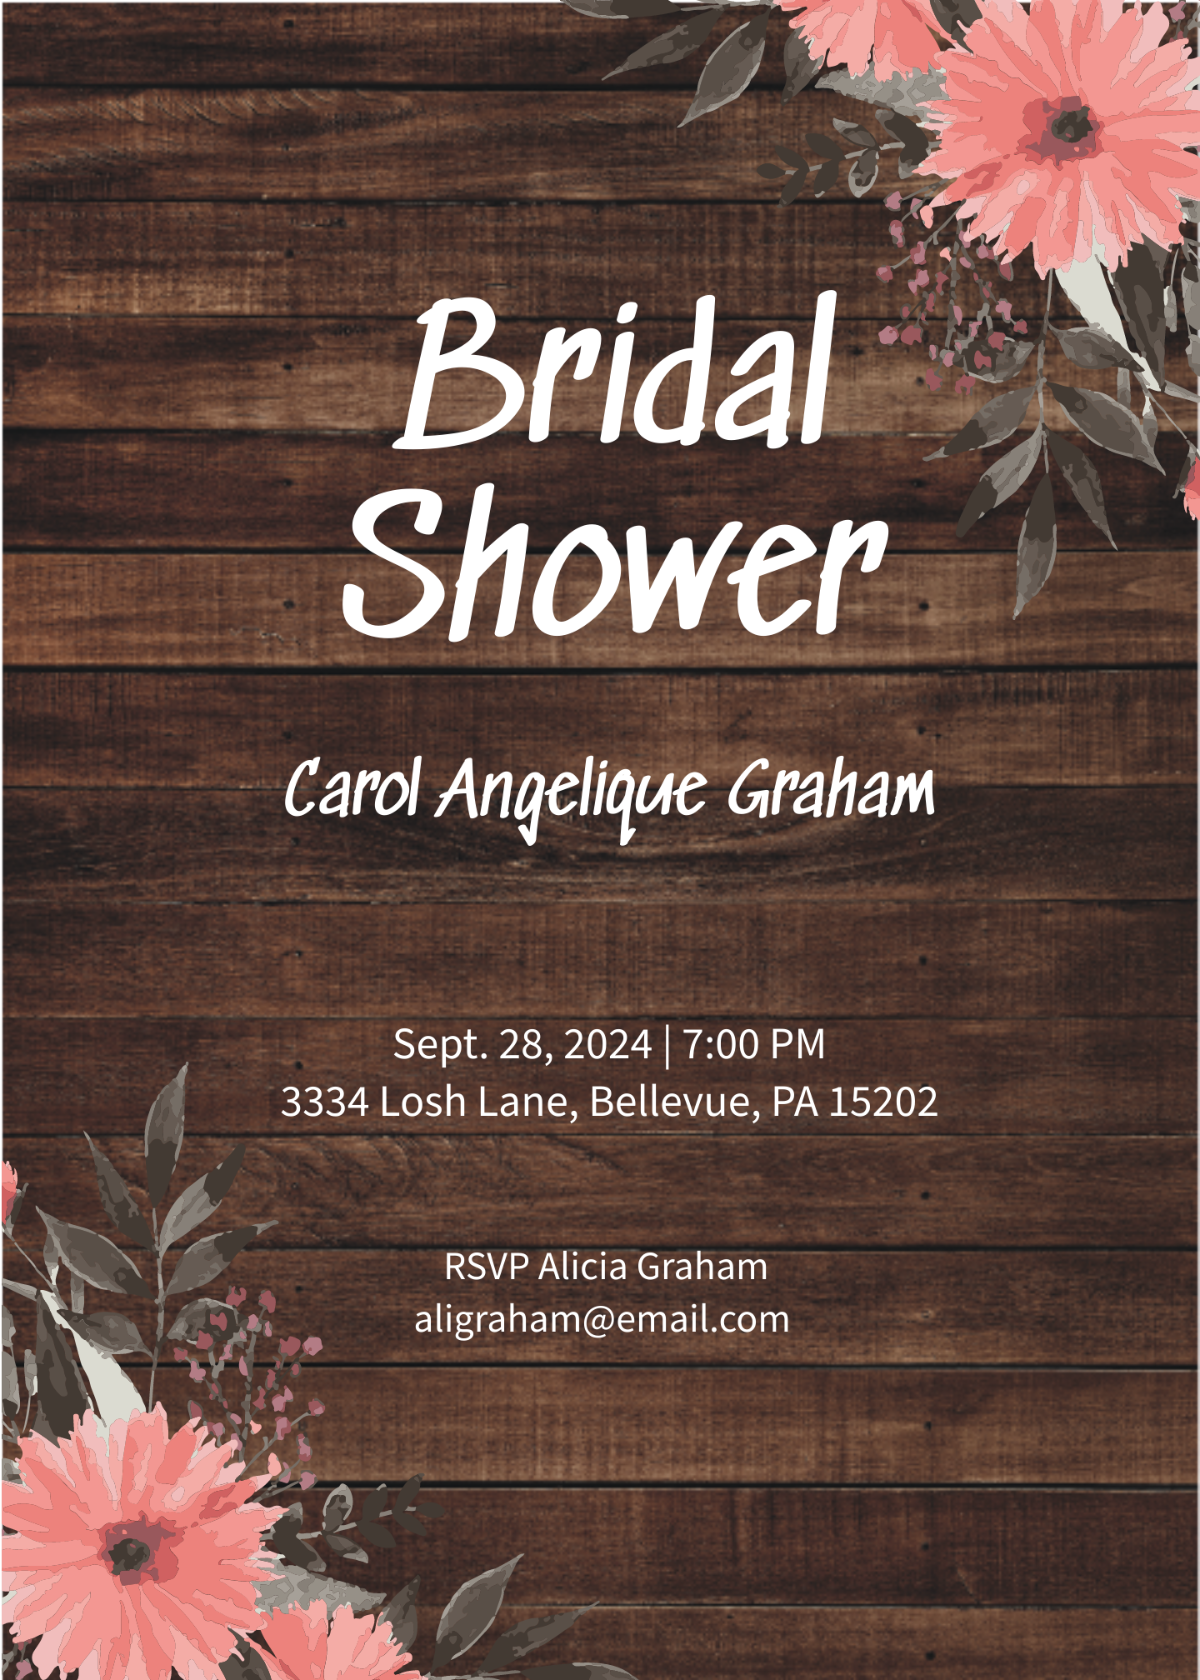 Rustic Bridal Shower Invitation Card Template